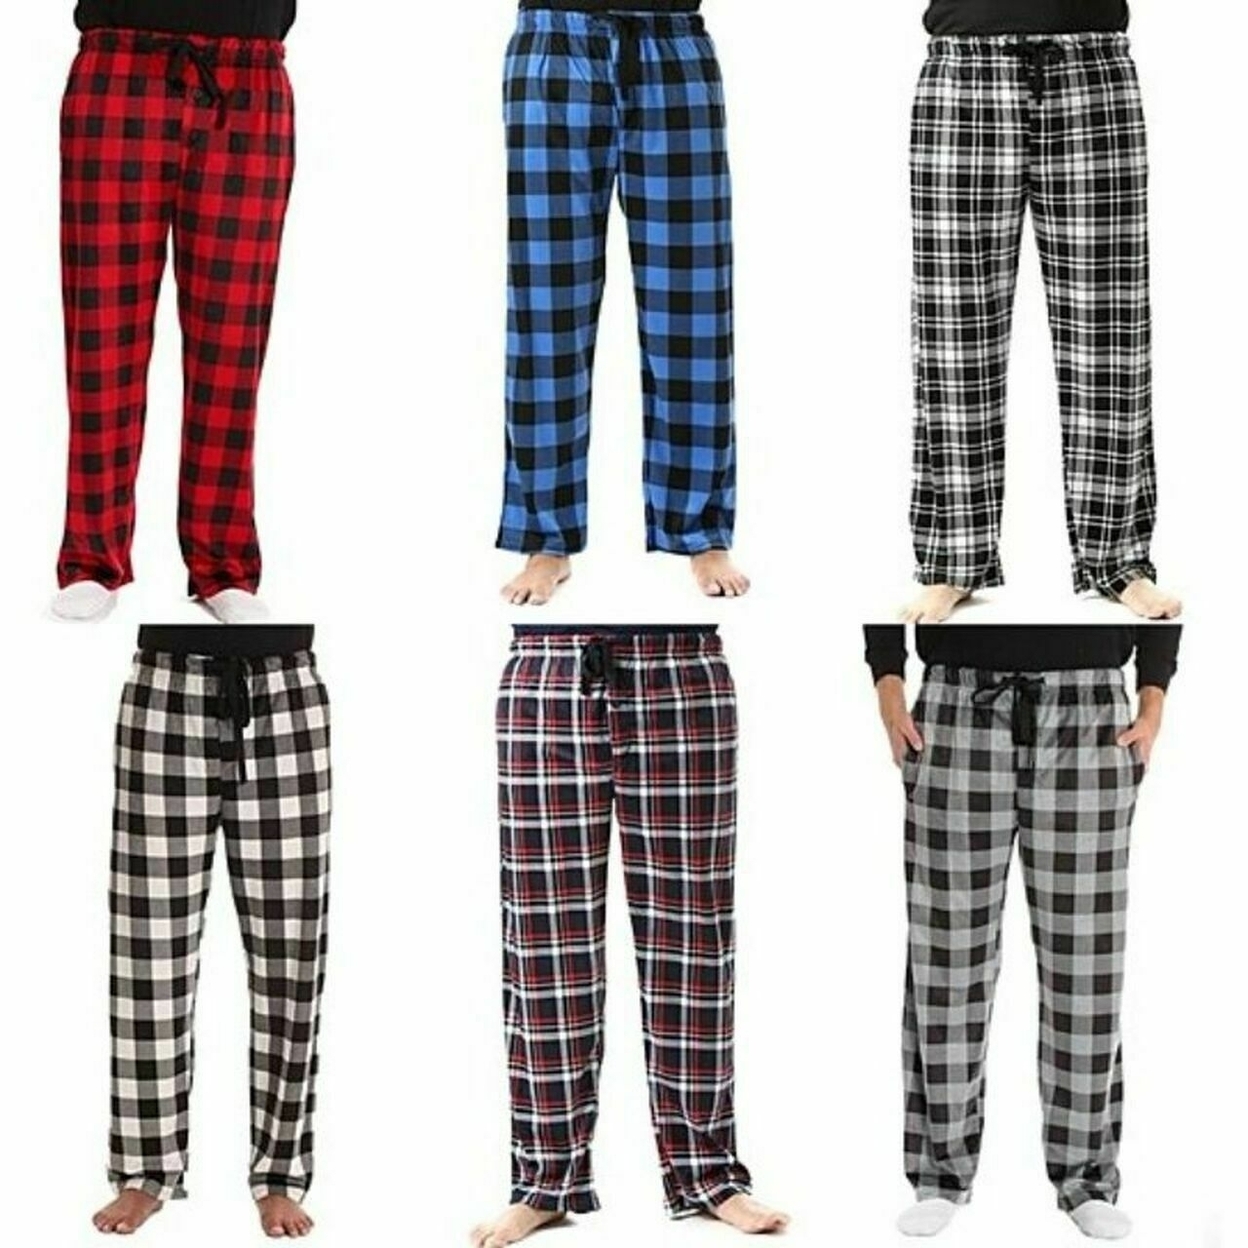 Men's Ultra-Soft Cozy Flannel Fleece Plaid Pajama Sleep Bottom Lounge Pants - Red, Medium